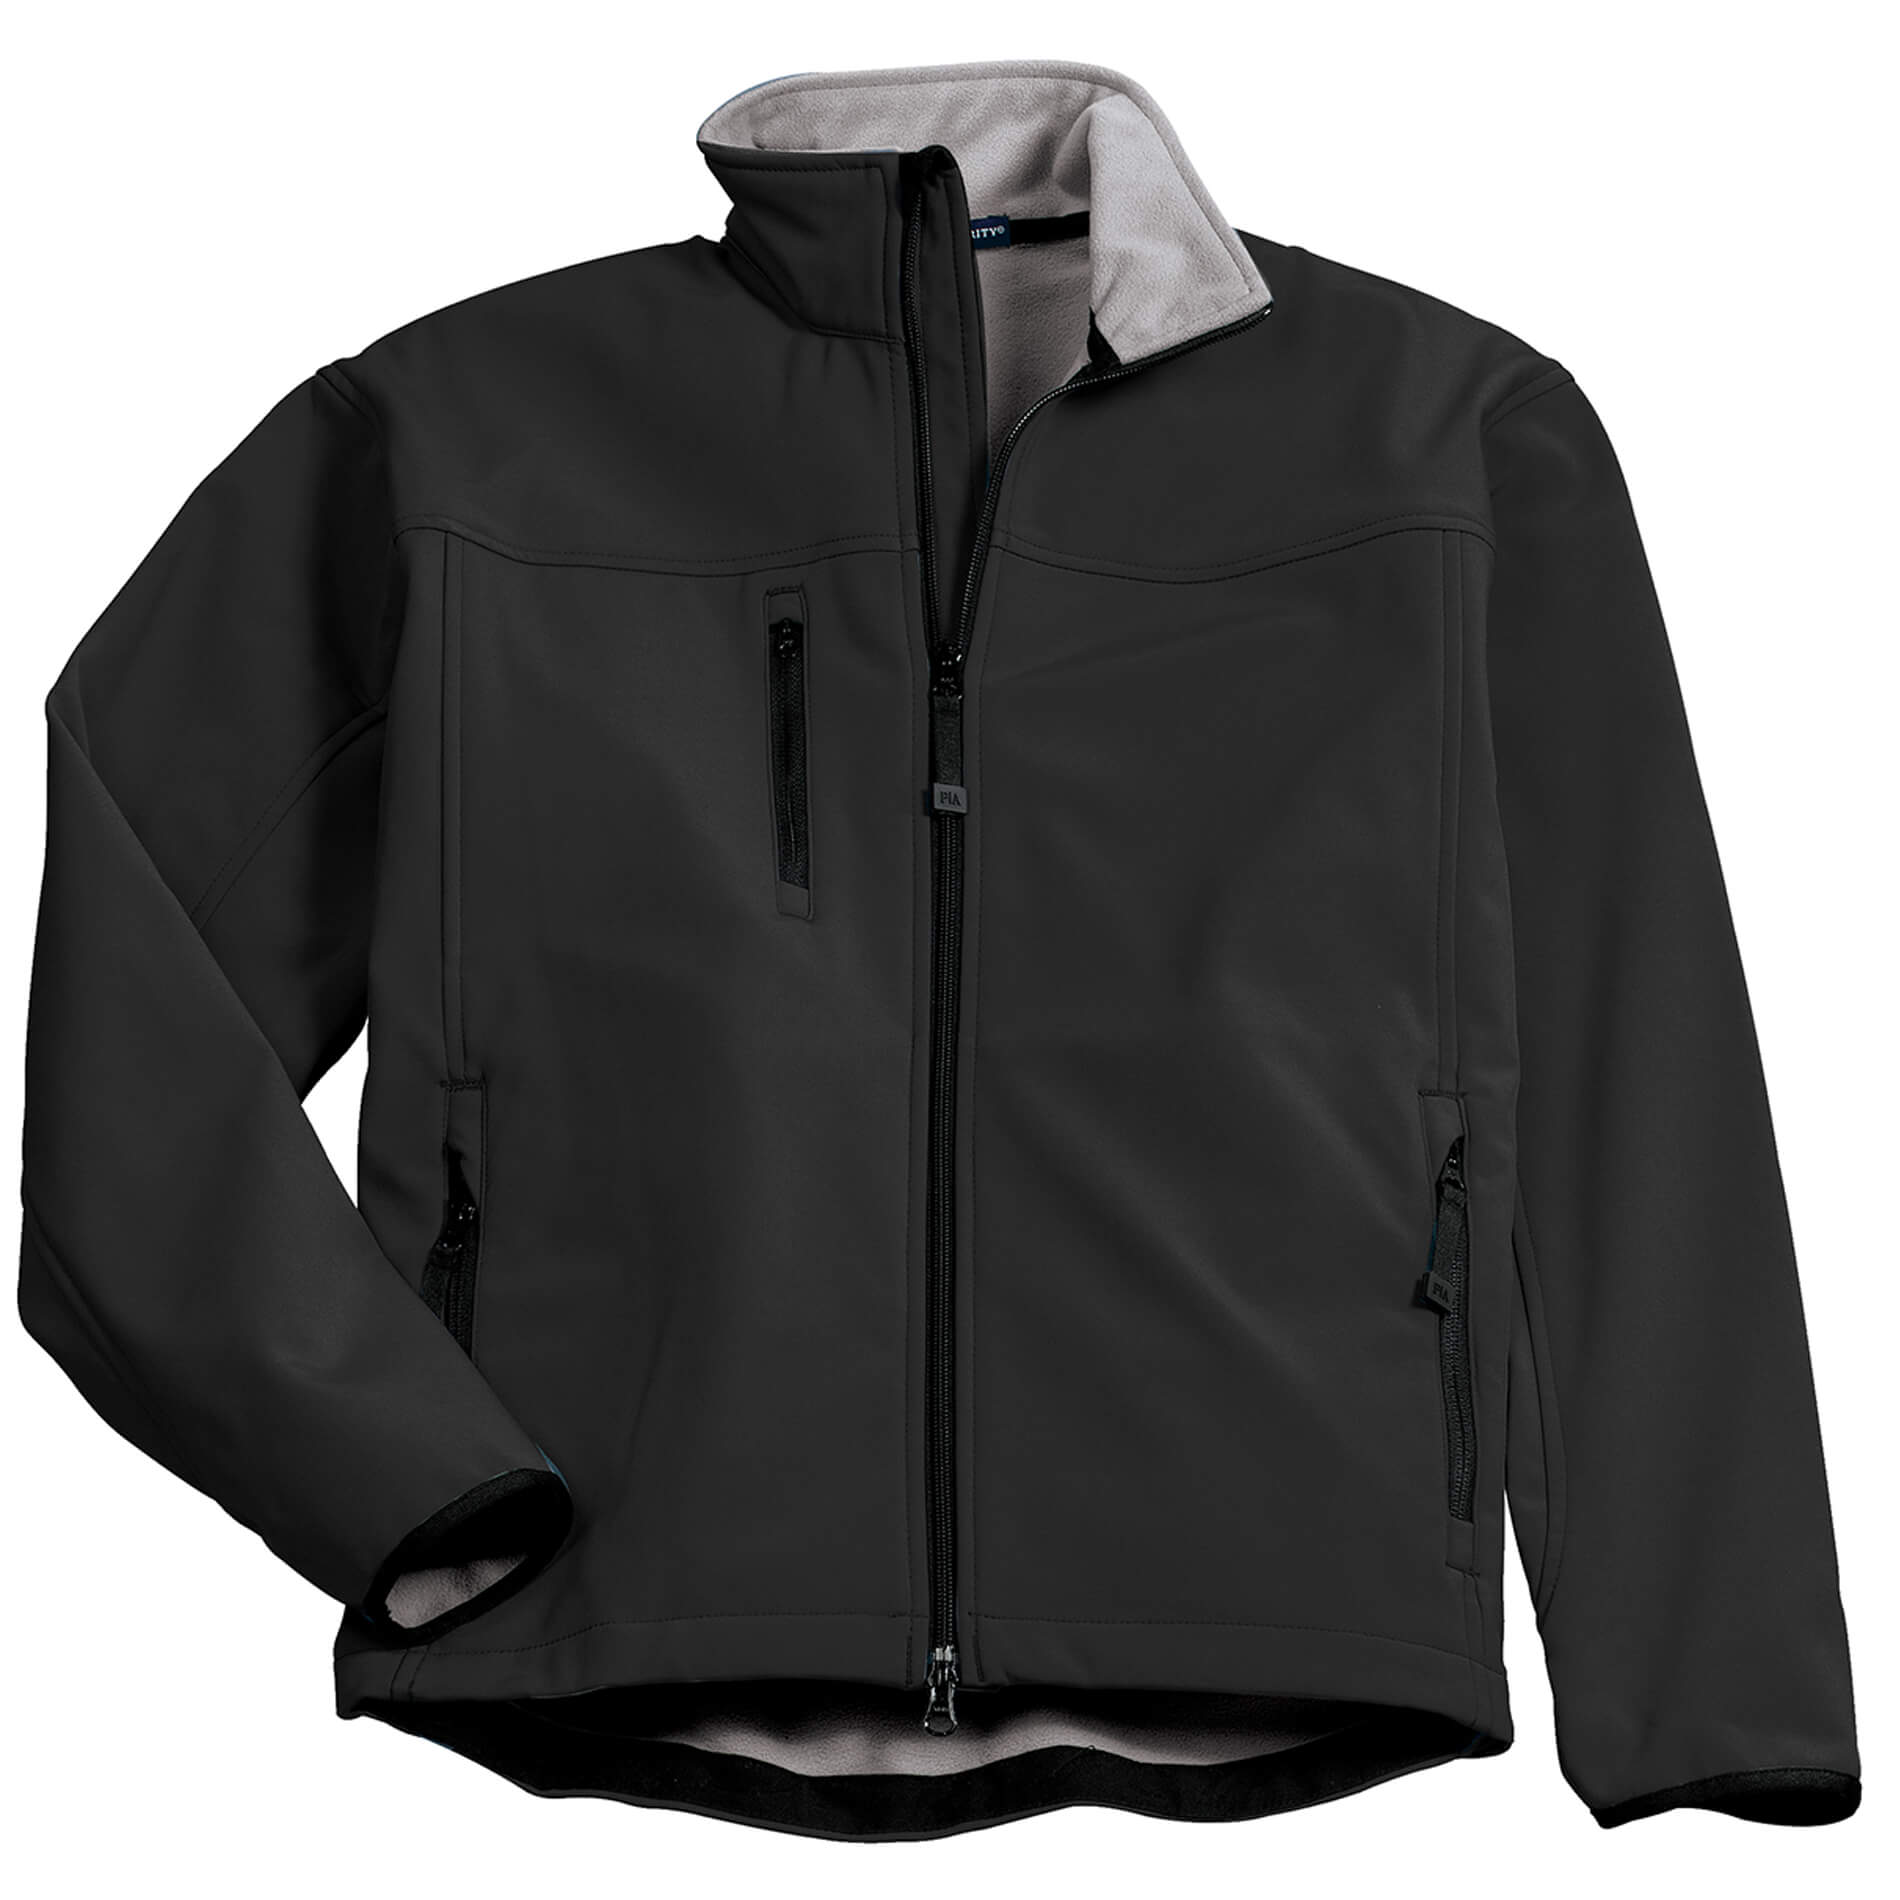 Ashley Furniture Gear: Men's PA Glacier Soft Shell Jacket